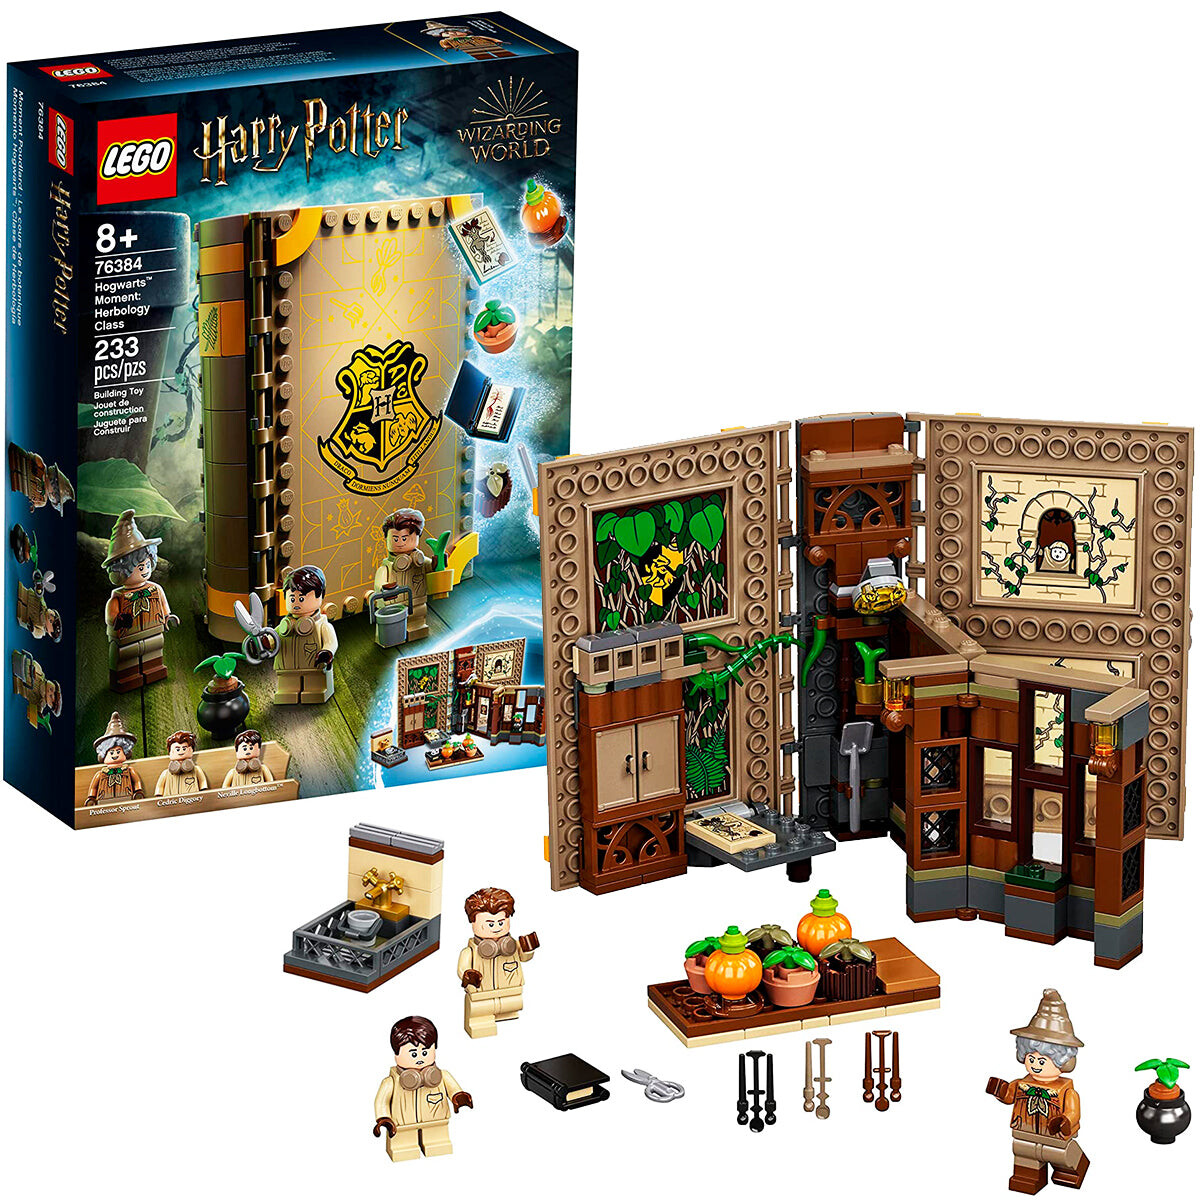 Lego Harry Potter 76384 Clase De Herbología 233pcs 